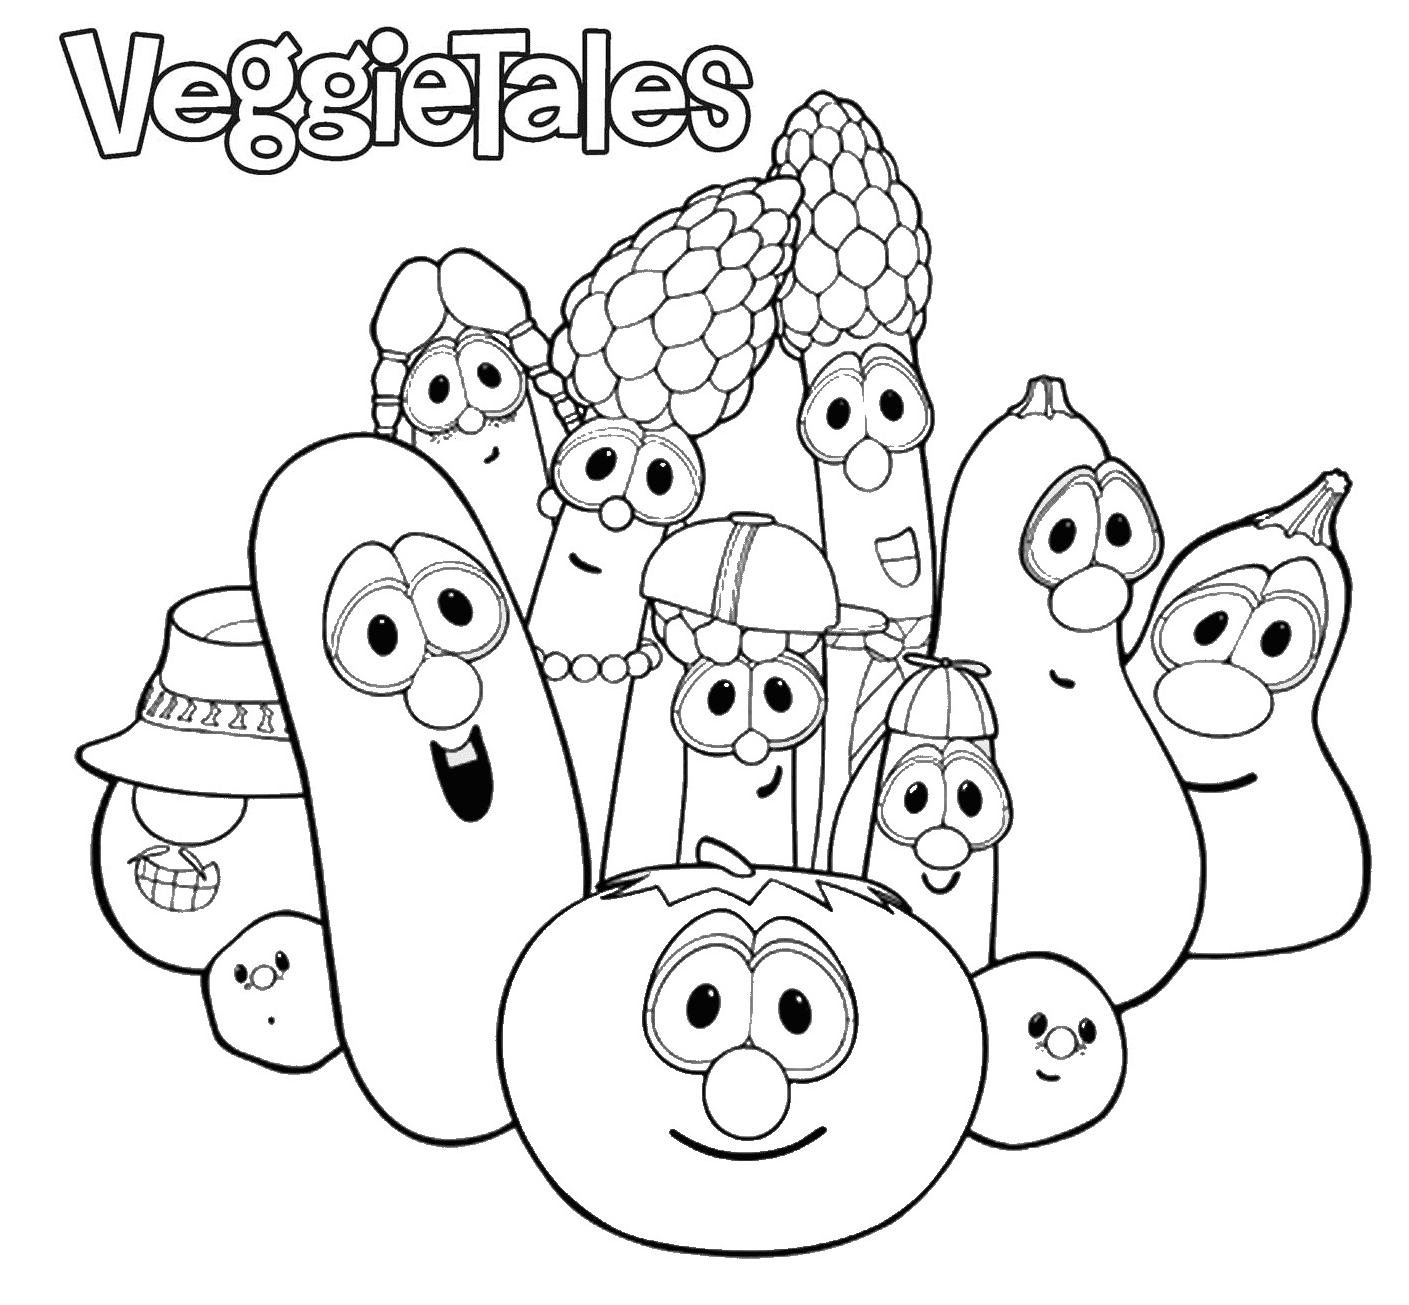 VeggieTales von VeggieTales